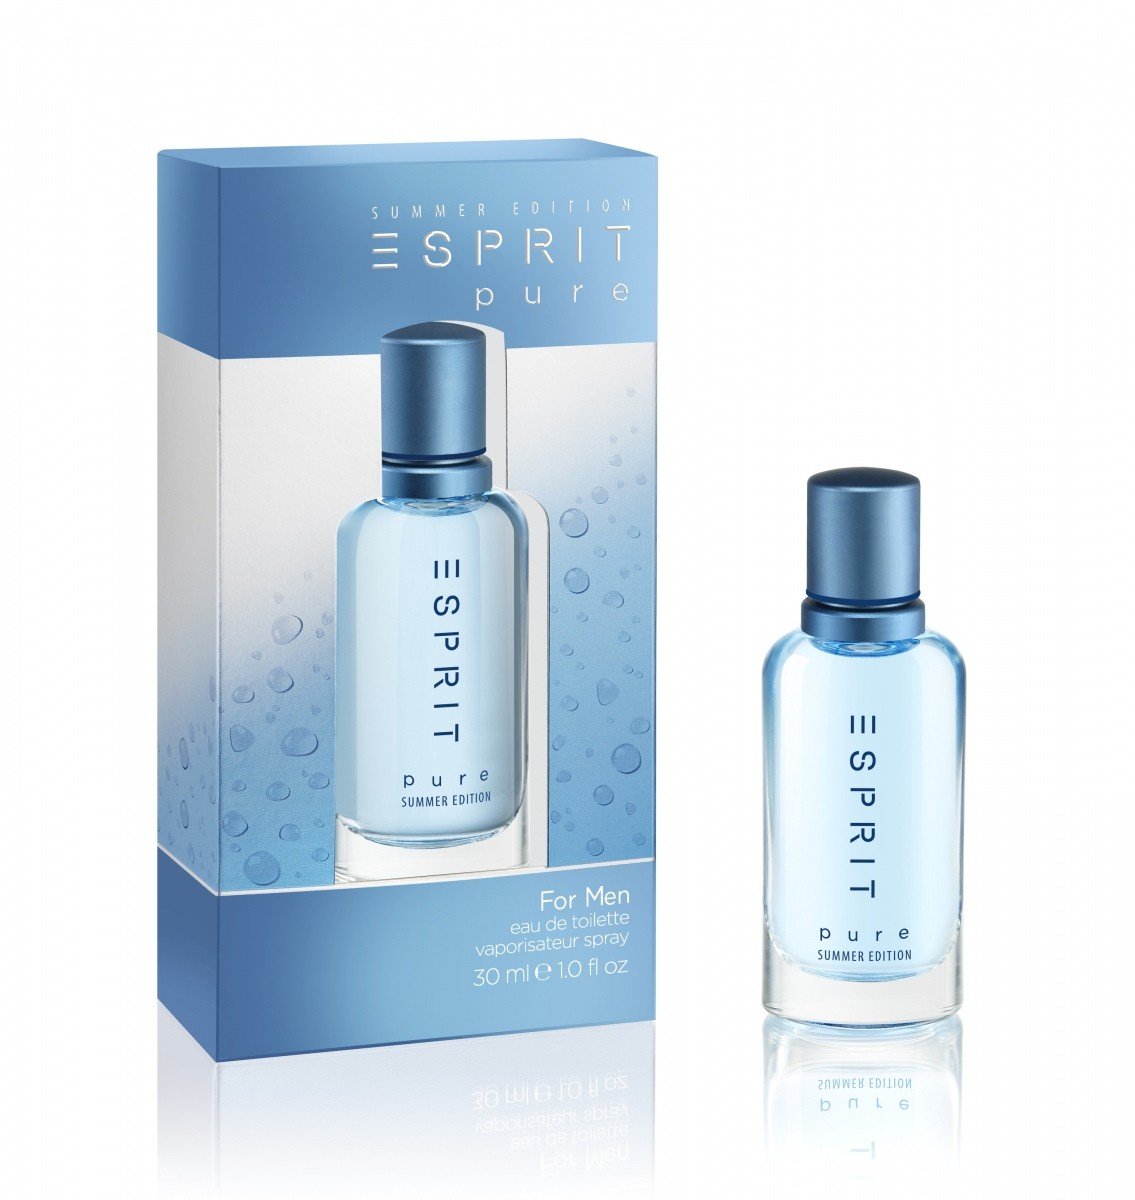 Esprit Man Esprit cologne a fragrance for men 2013